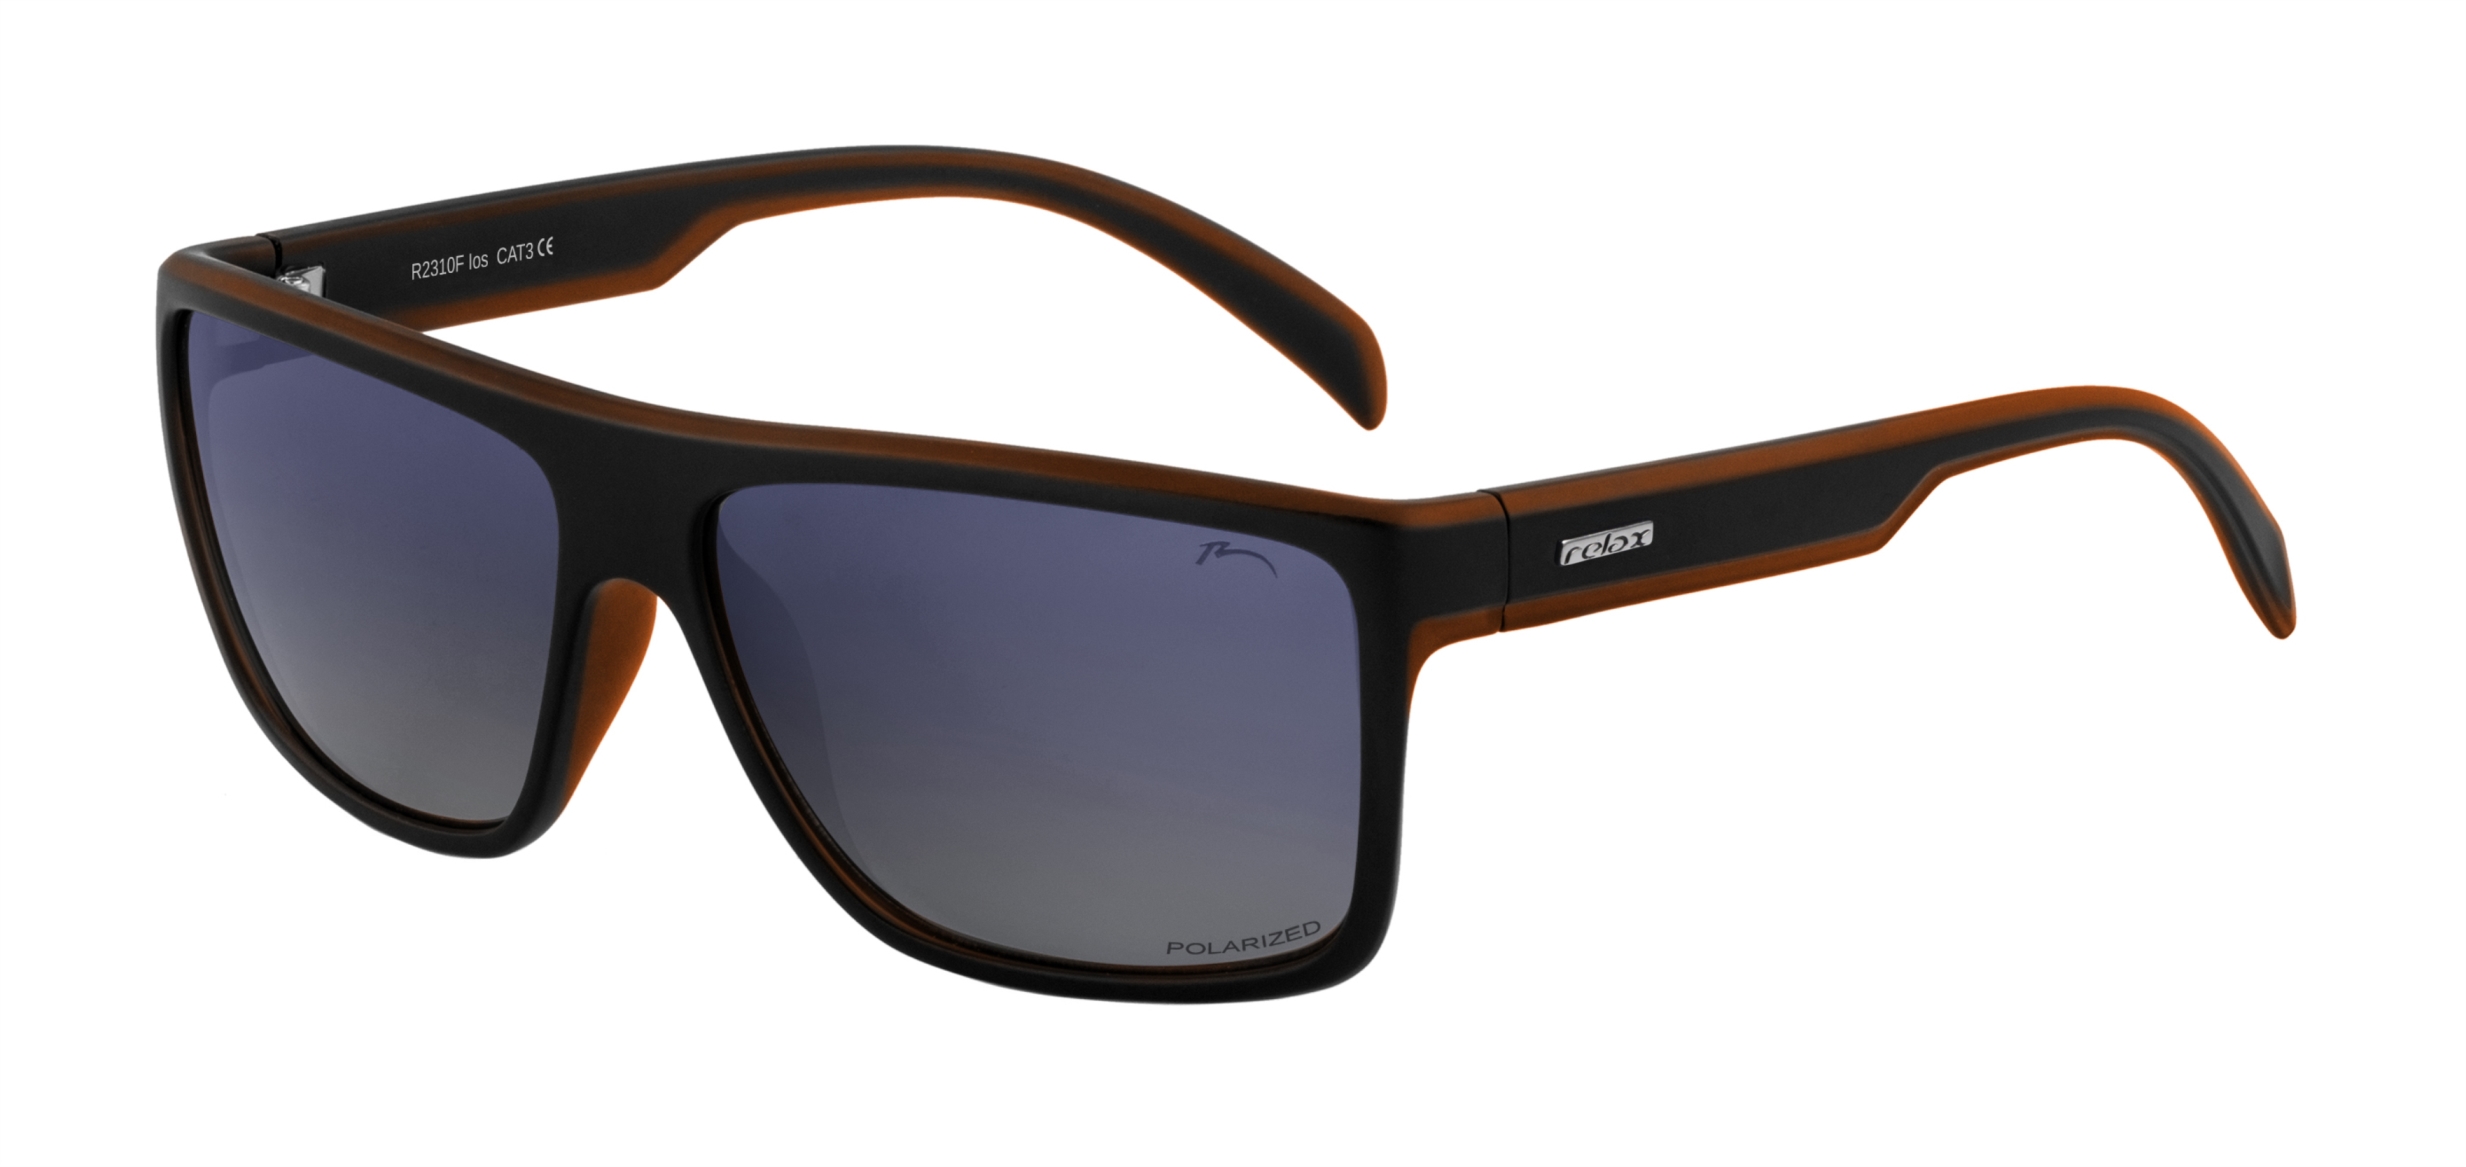 Polarized sunglasses  Relax Ios  R2310F